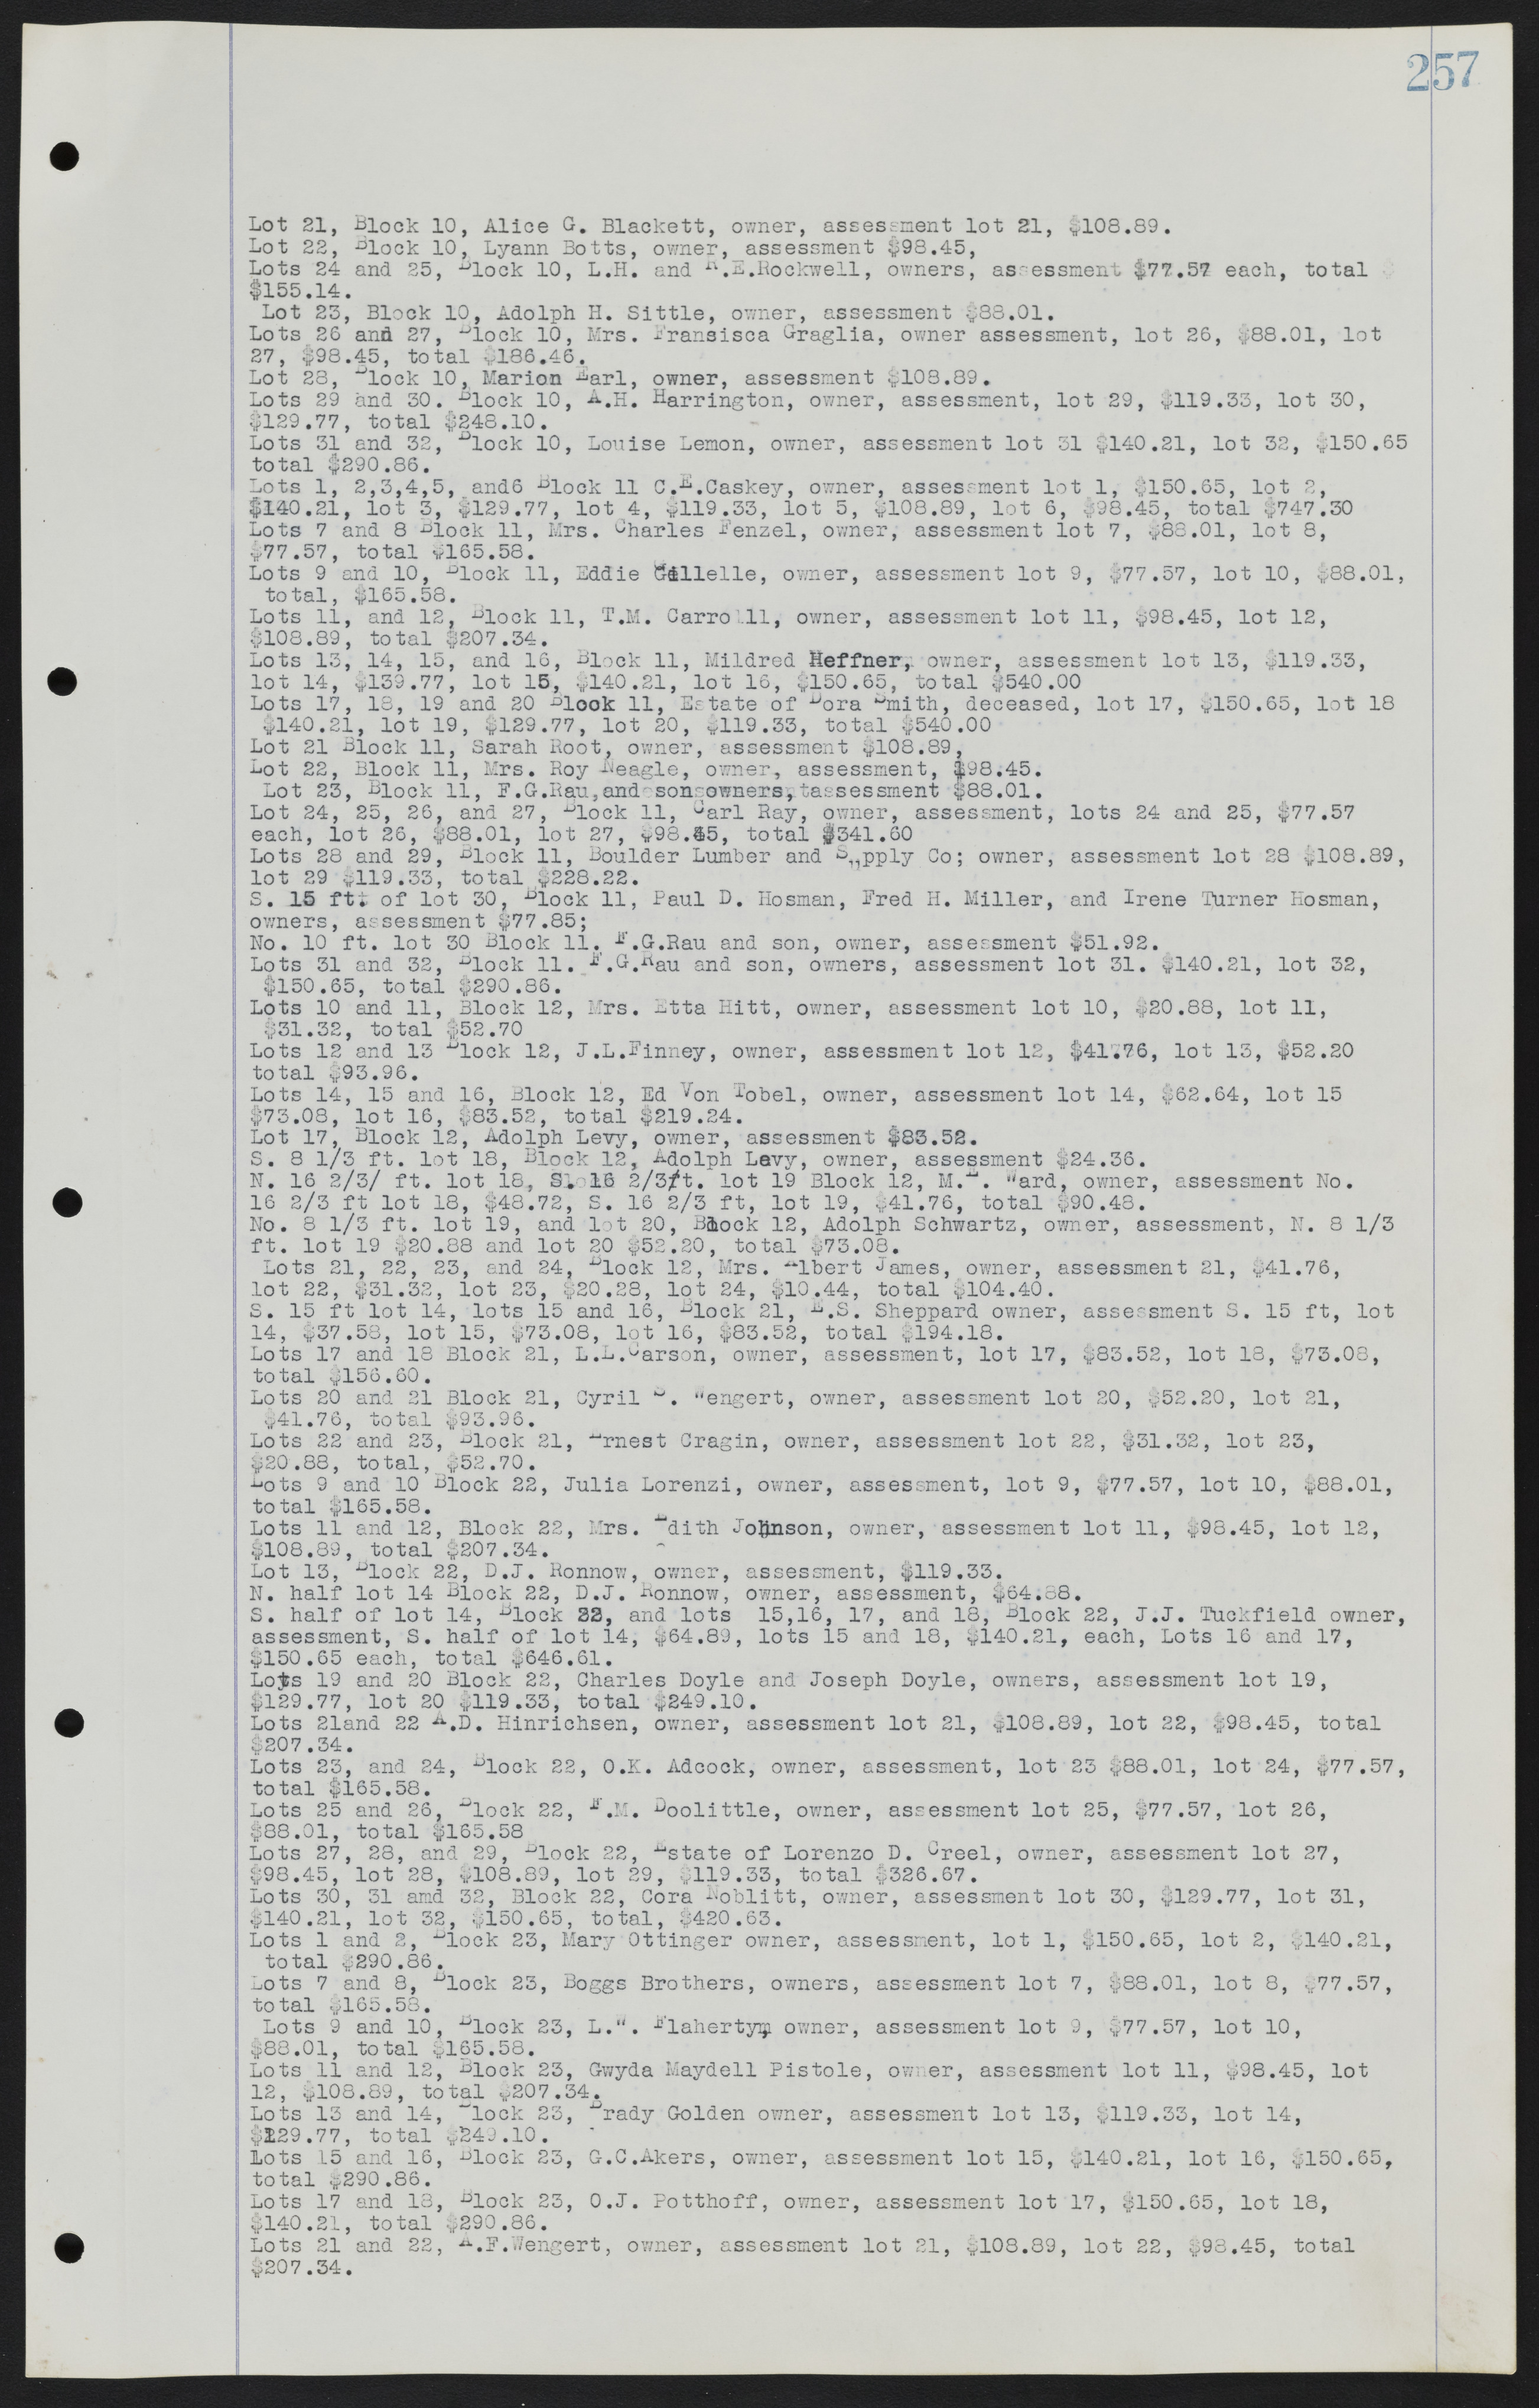 Las Vegas City Ordinances, July 18, 1911 to March 31, 1933, lvc000013-261